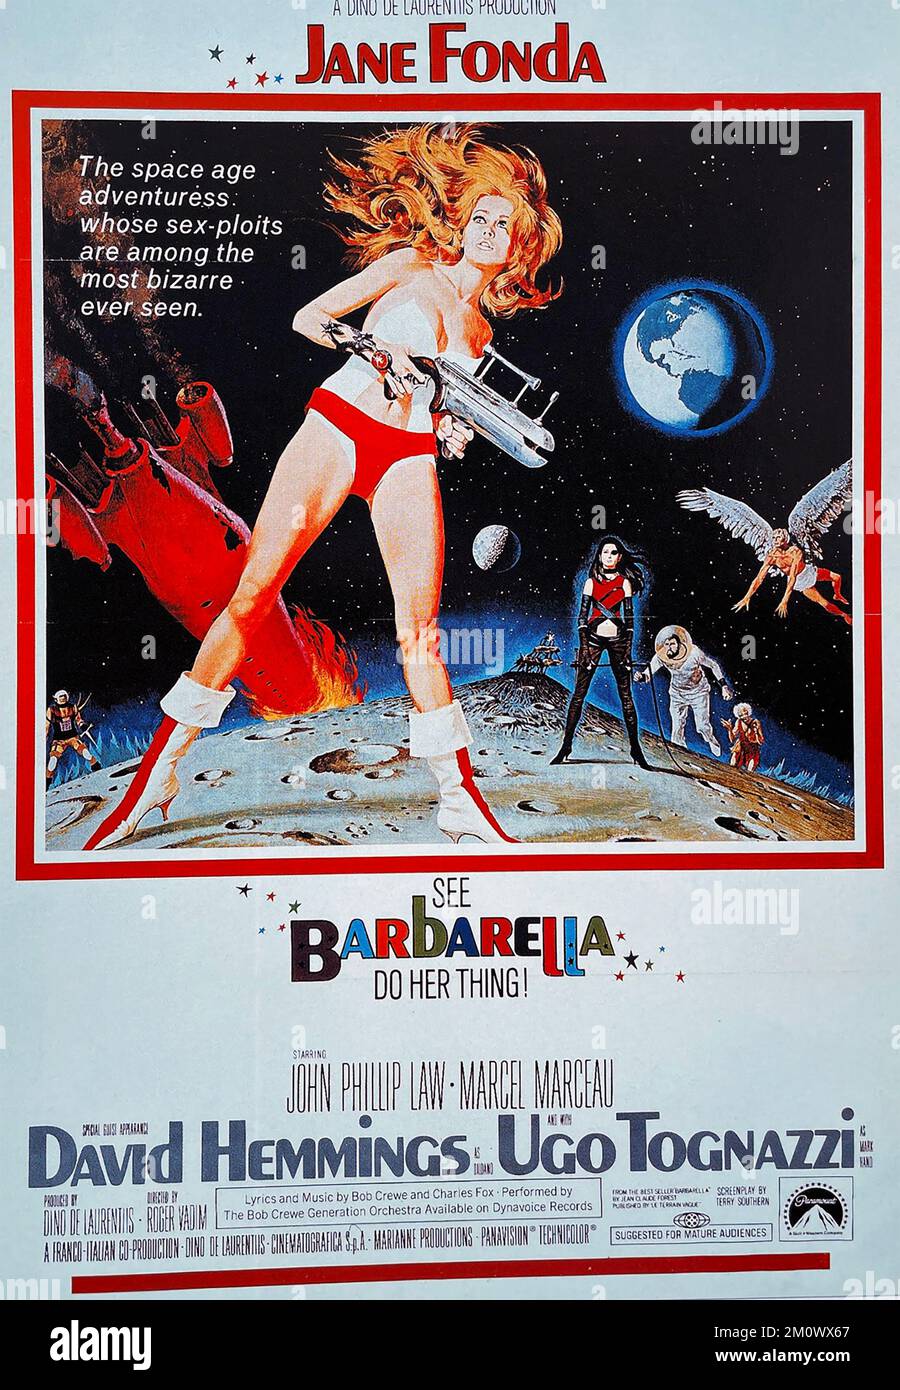 BARBARELLA 1968 Paramount Pictures film with Jane Fonda. Poser by Robert McGinnis Stock Photo